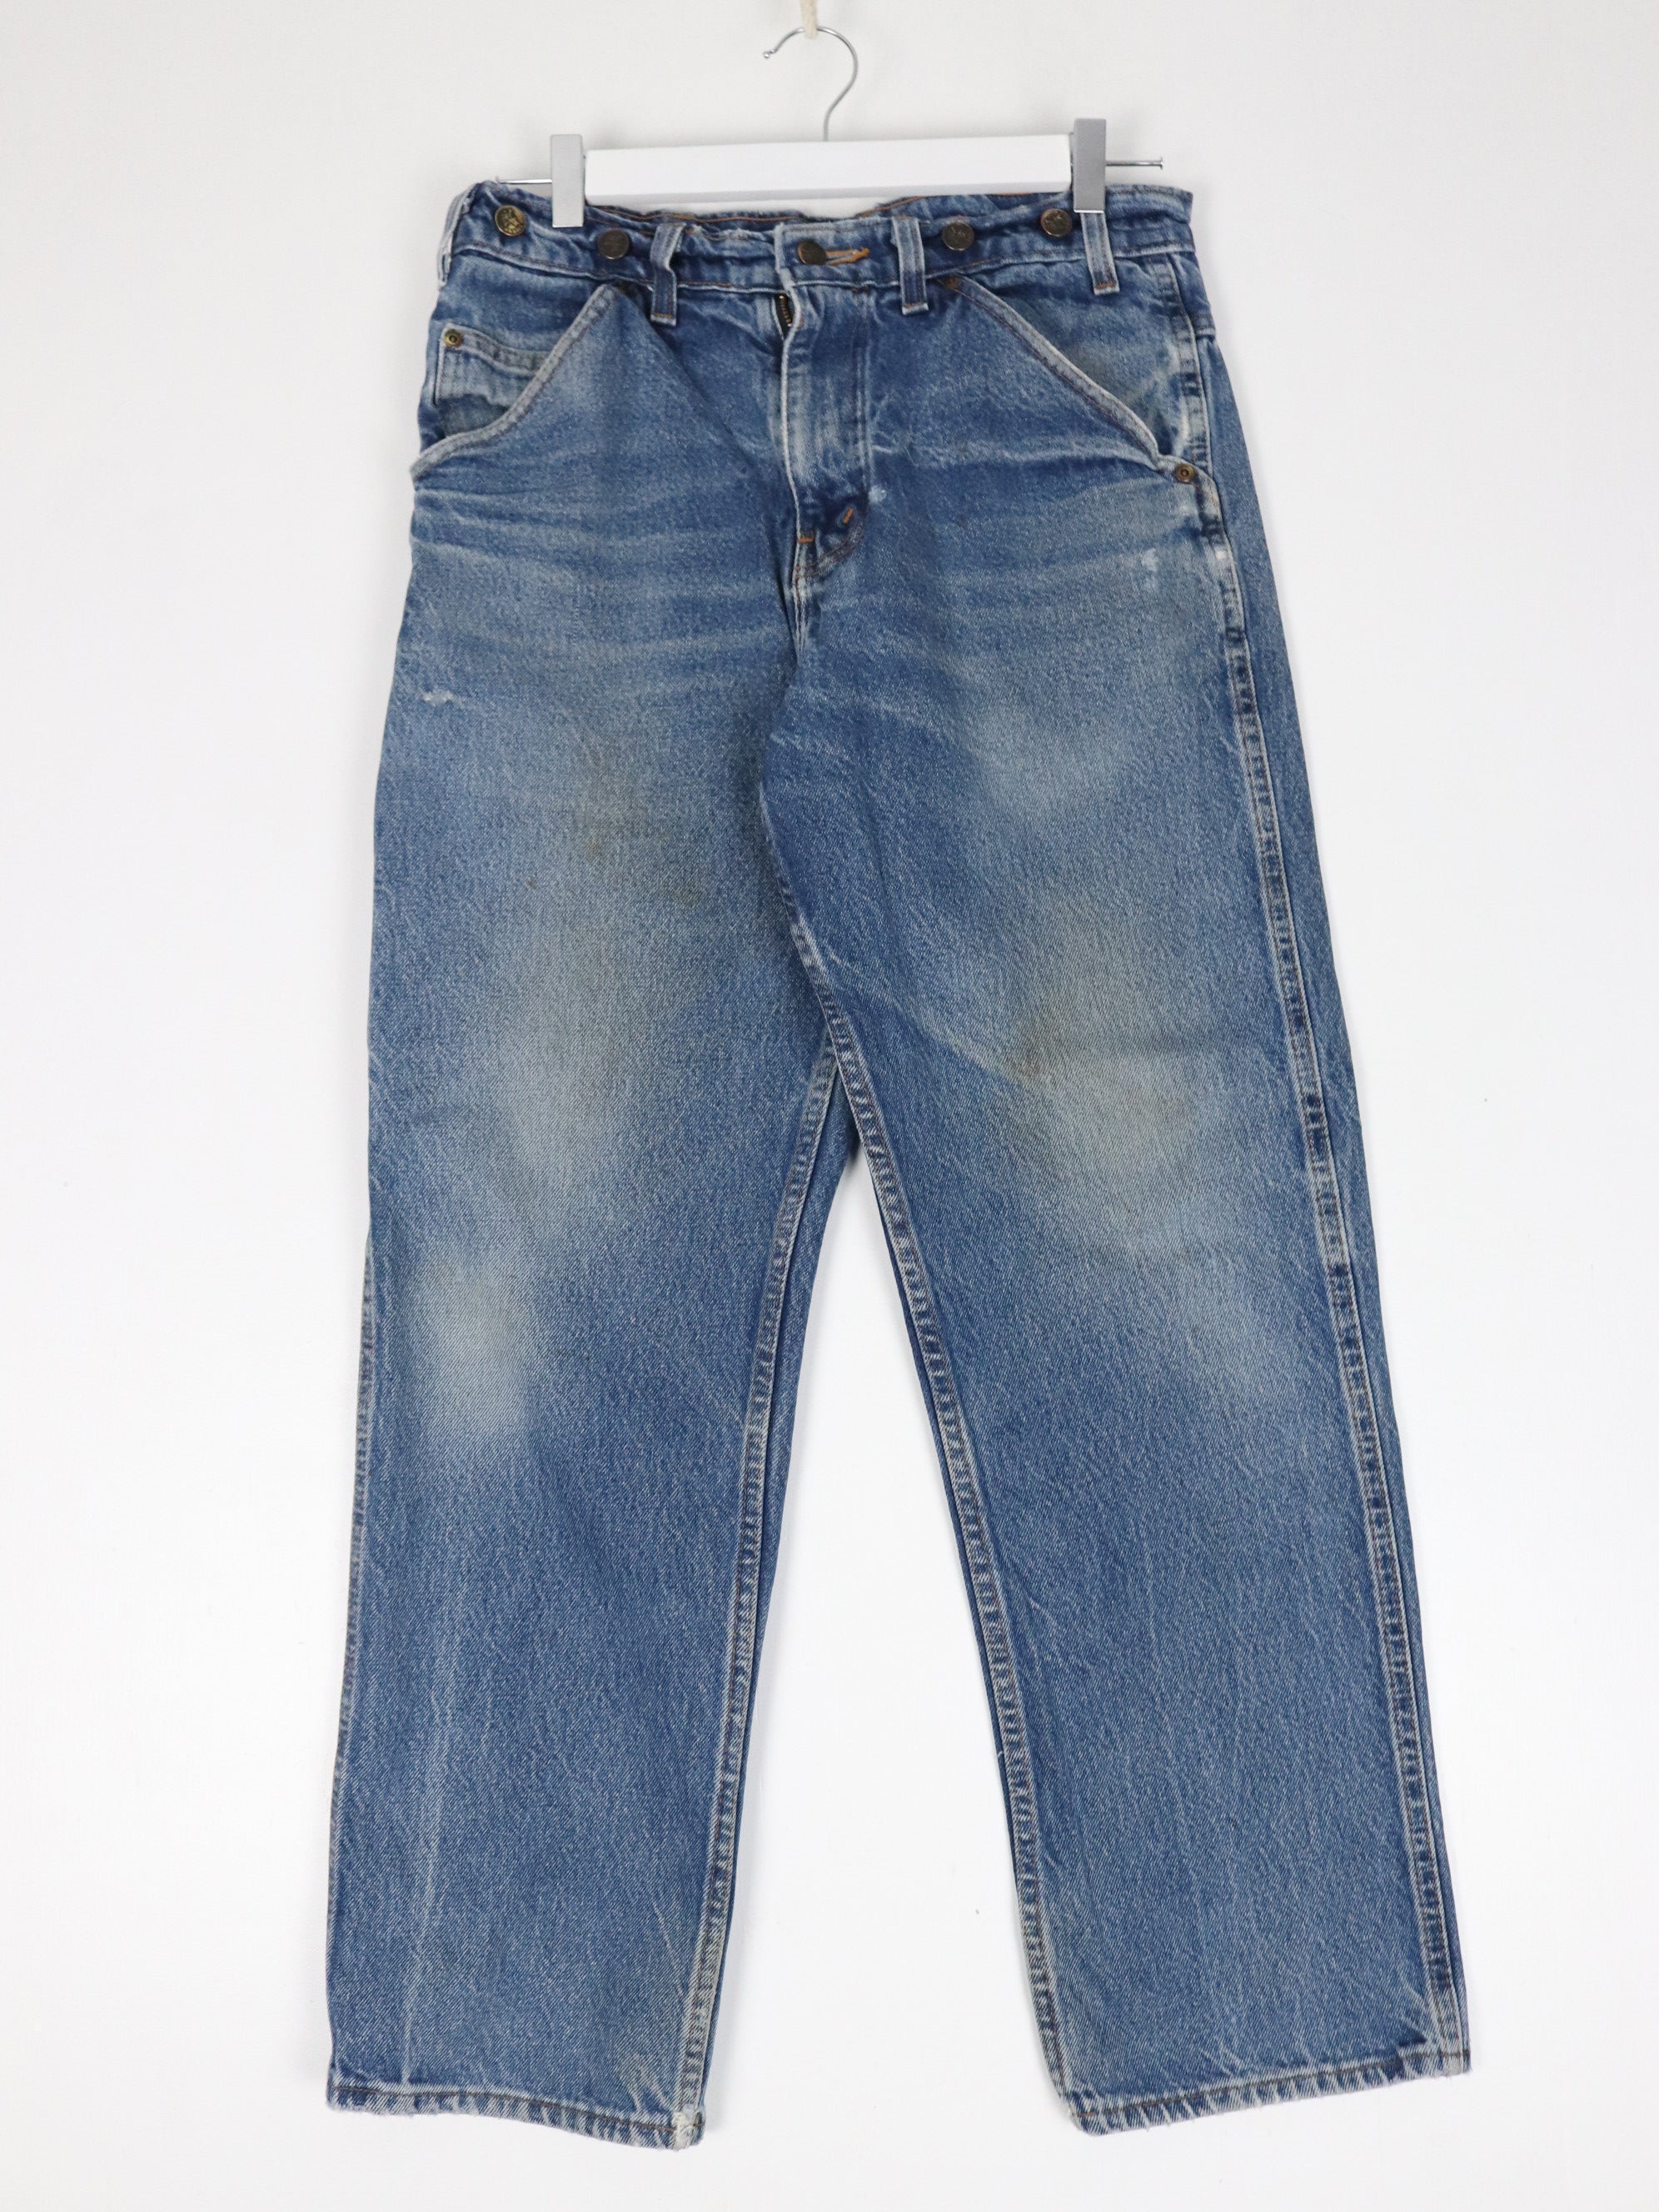 Blue jeans with underwear imitation (Art 026/5.2 ) in an online